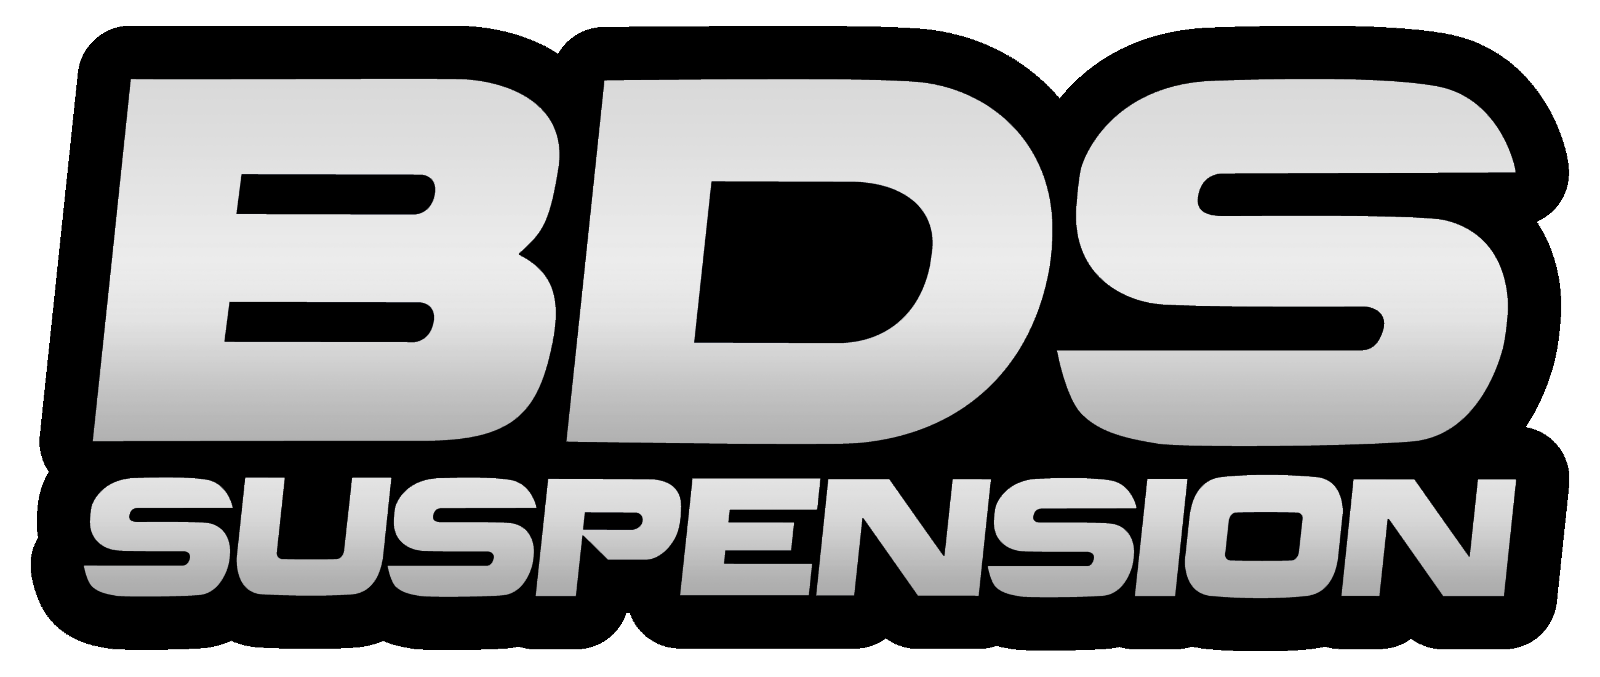 BDS BDS732FS 6 Inch Lift Kit Chevy/GMC SuburbanTahoeYukon/XL 1500 (15-19) 4WD